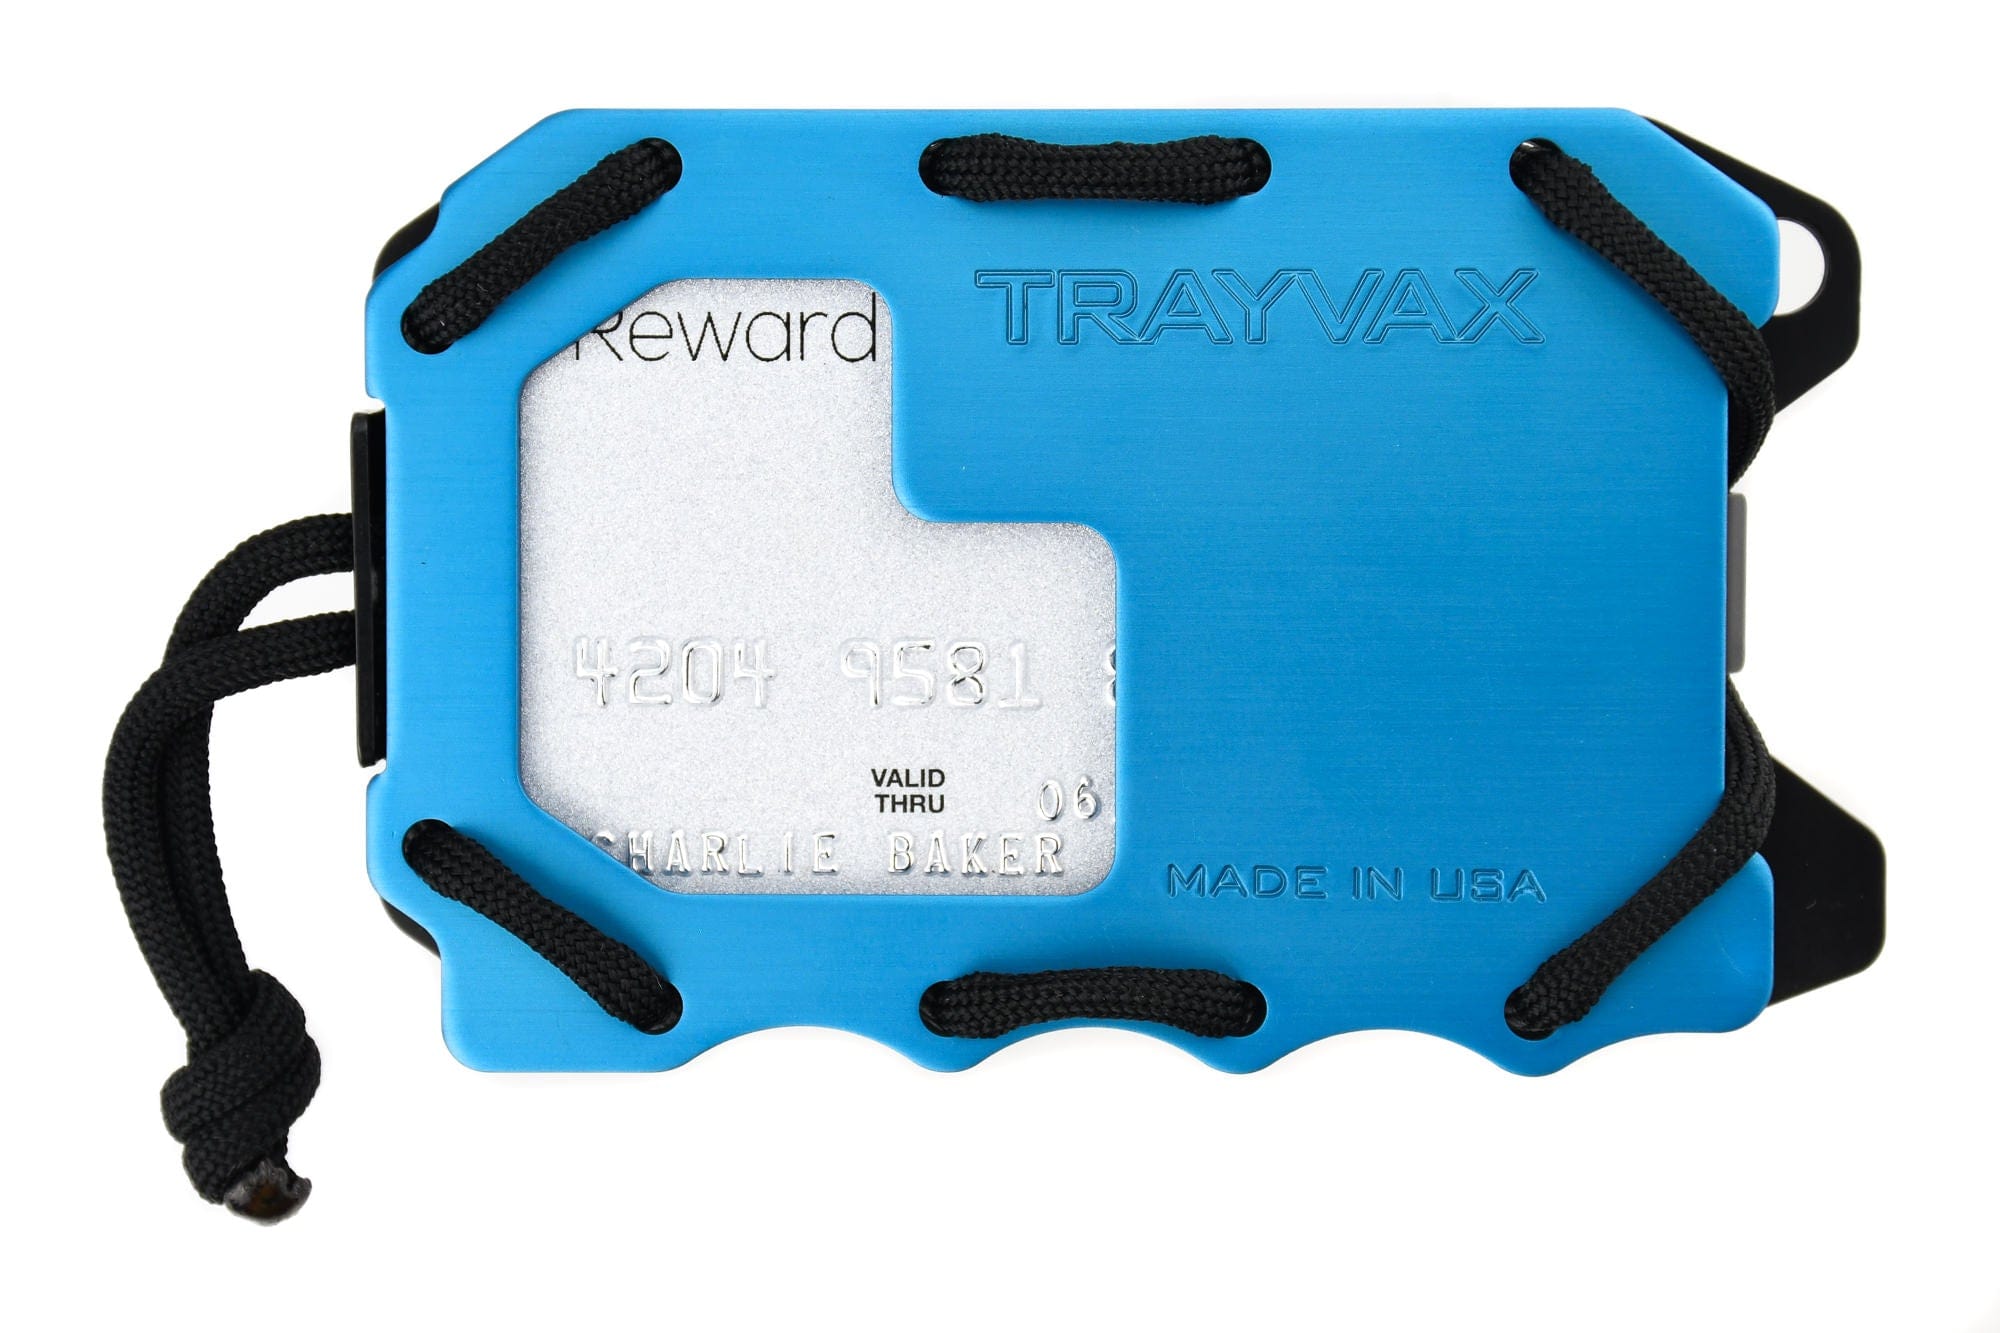 Trayvax Enterprises Wallet Blue - Seconds Seconds | Original 2.0 Wallet